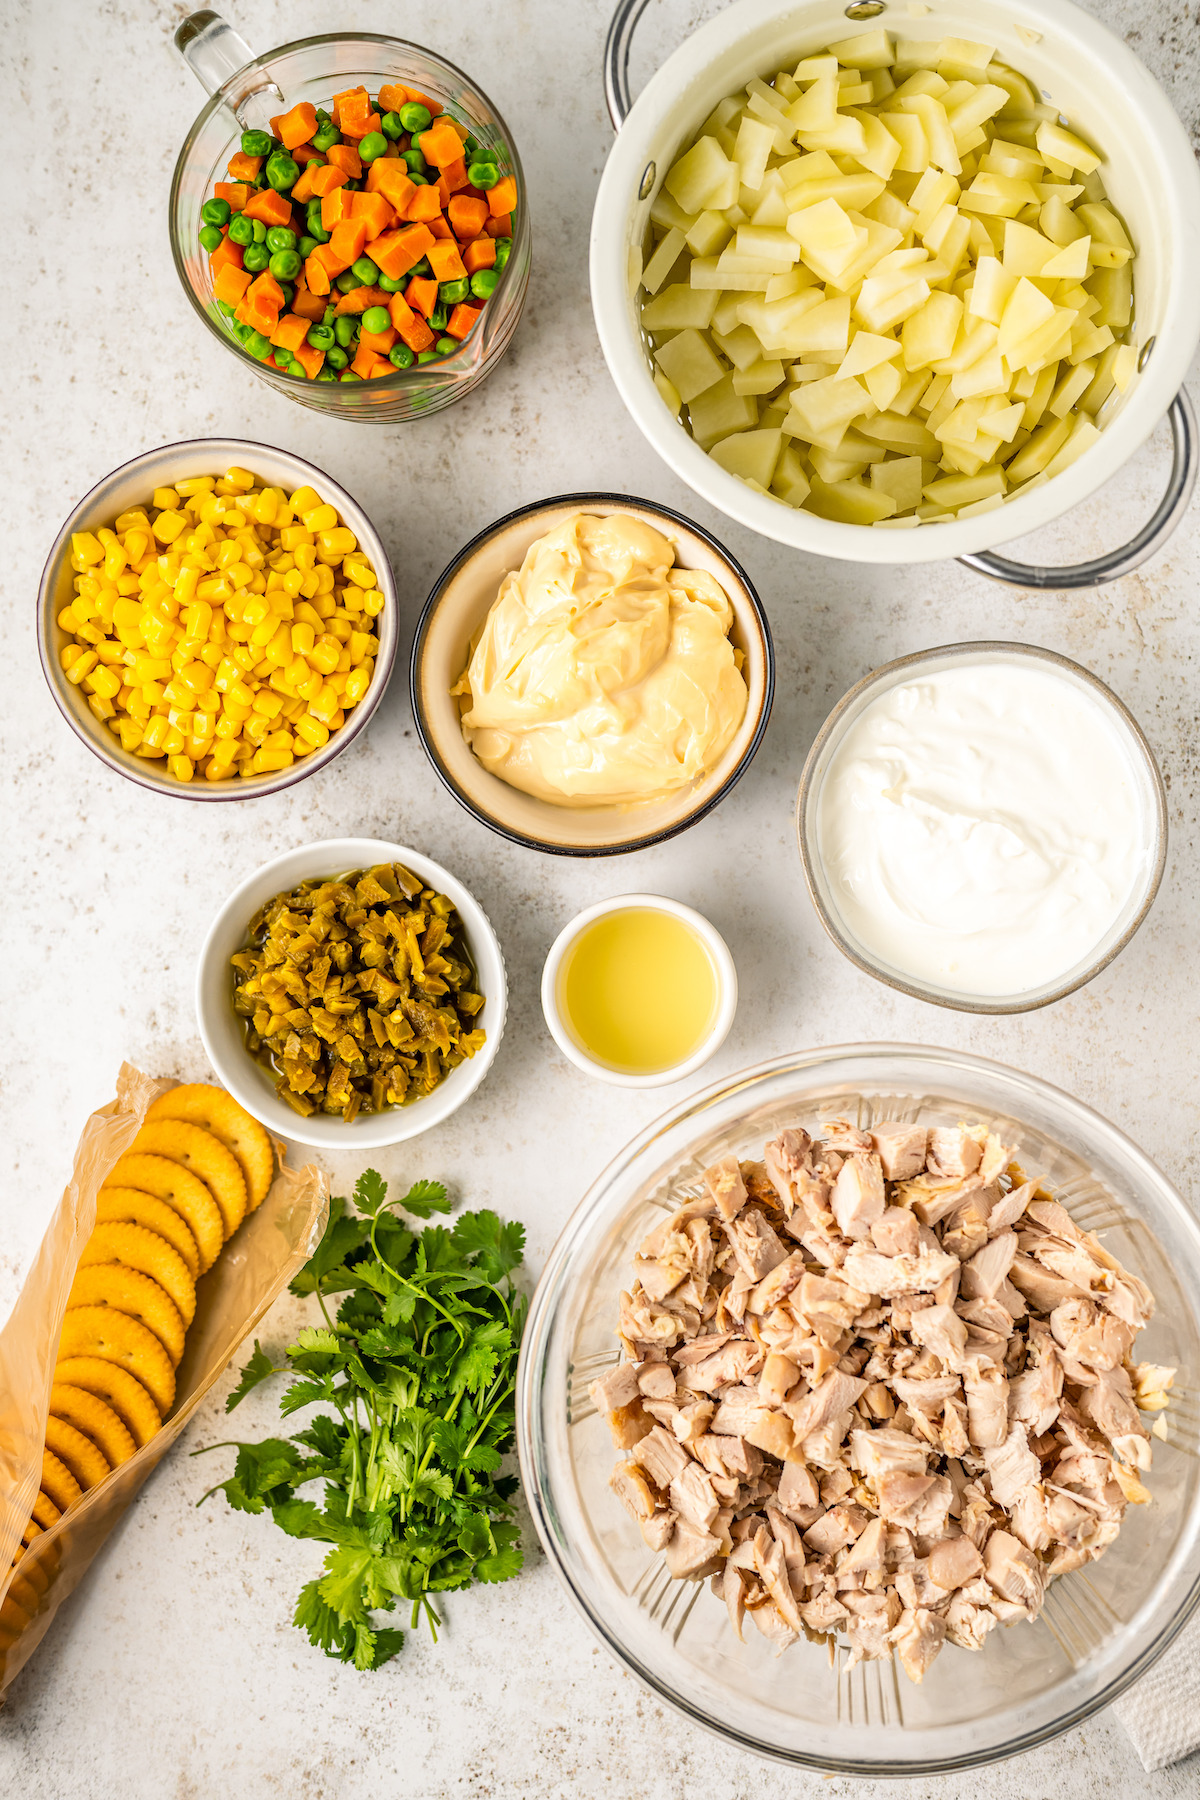 Ingredients for chicken salad.